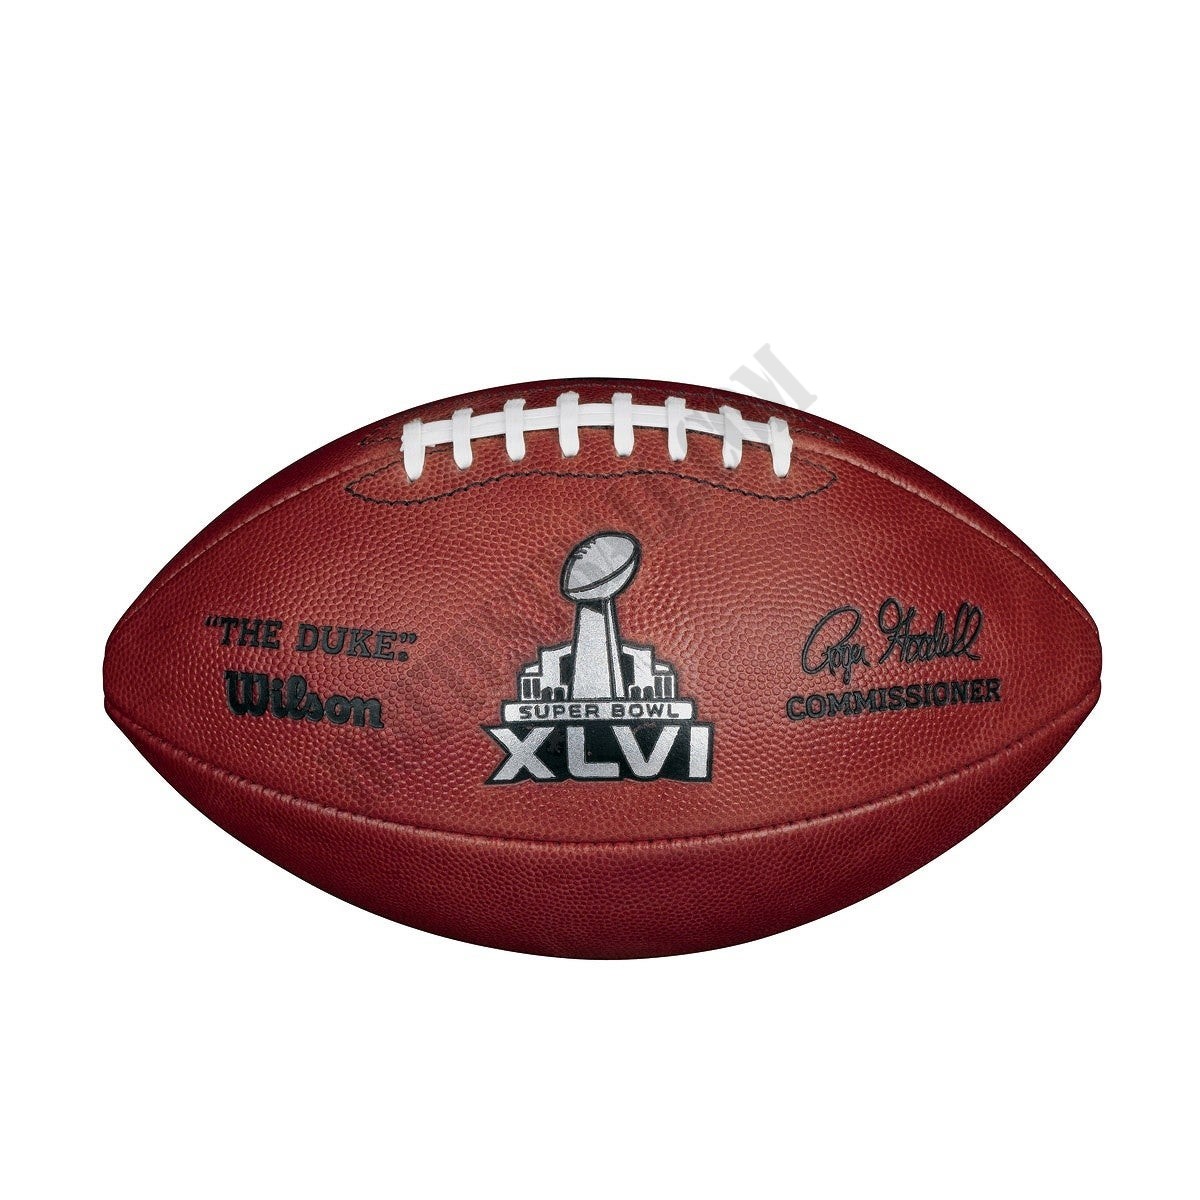 Super Bowl XLVI Game Football - New York Giants ● Wilson Promotions - Super Bowl XLVI Game Football - New York Giants ● Wilson Promotions